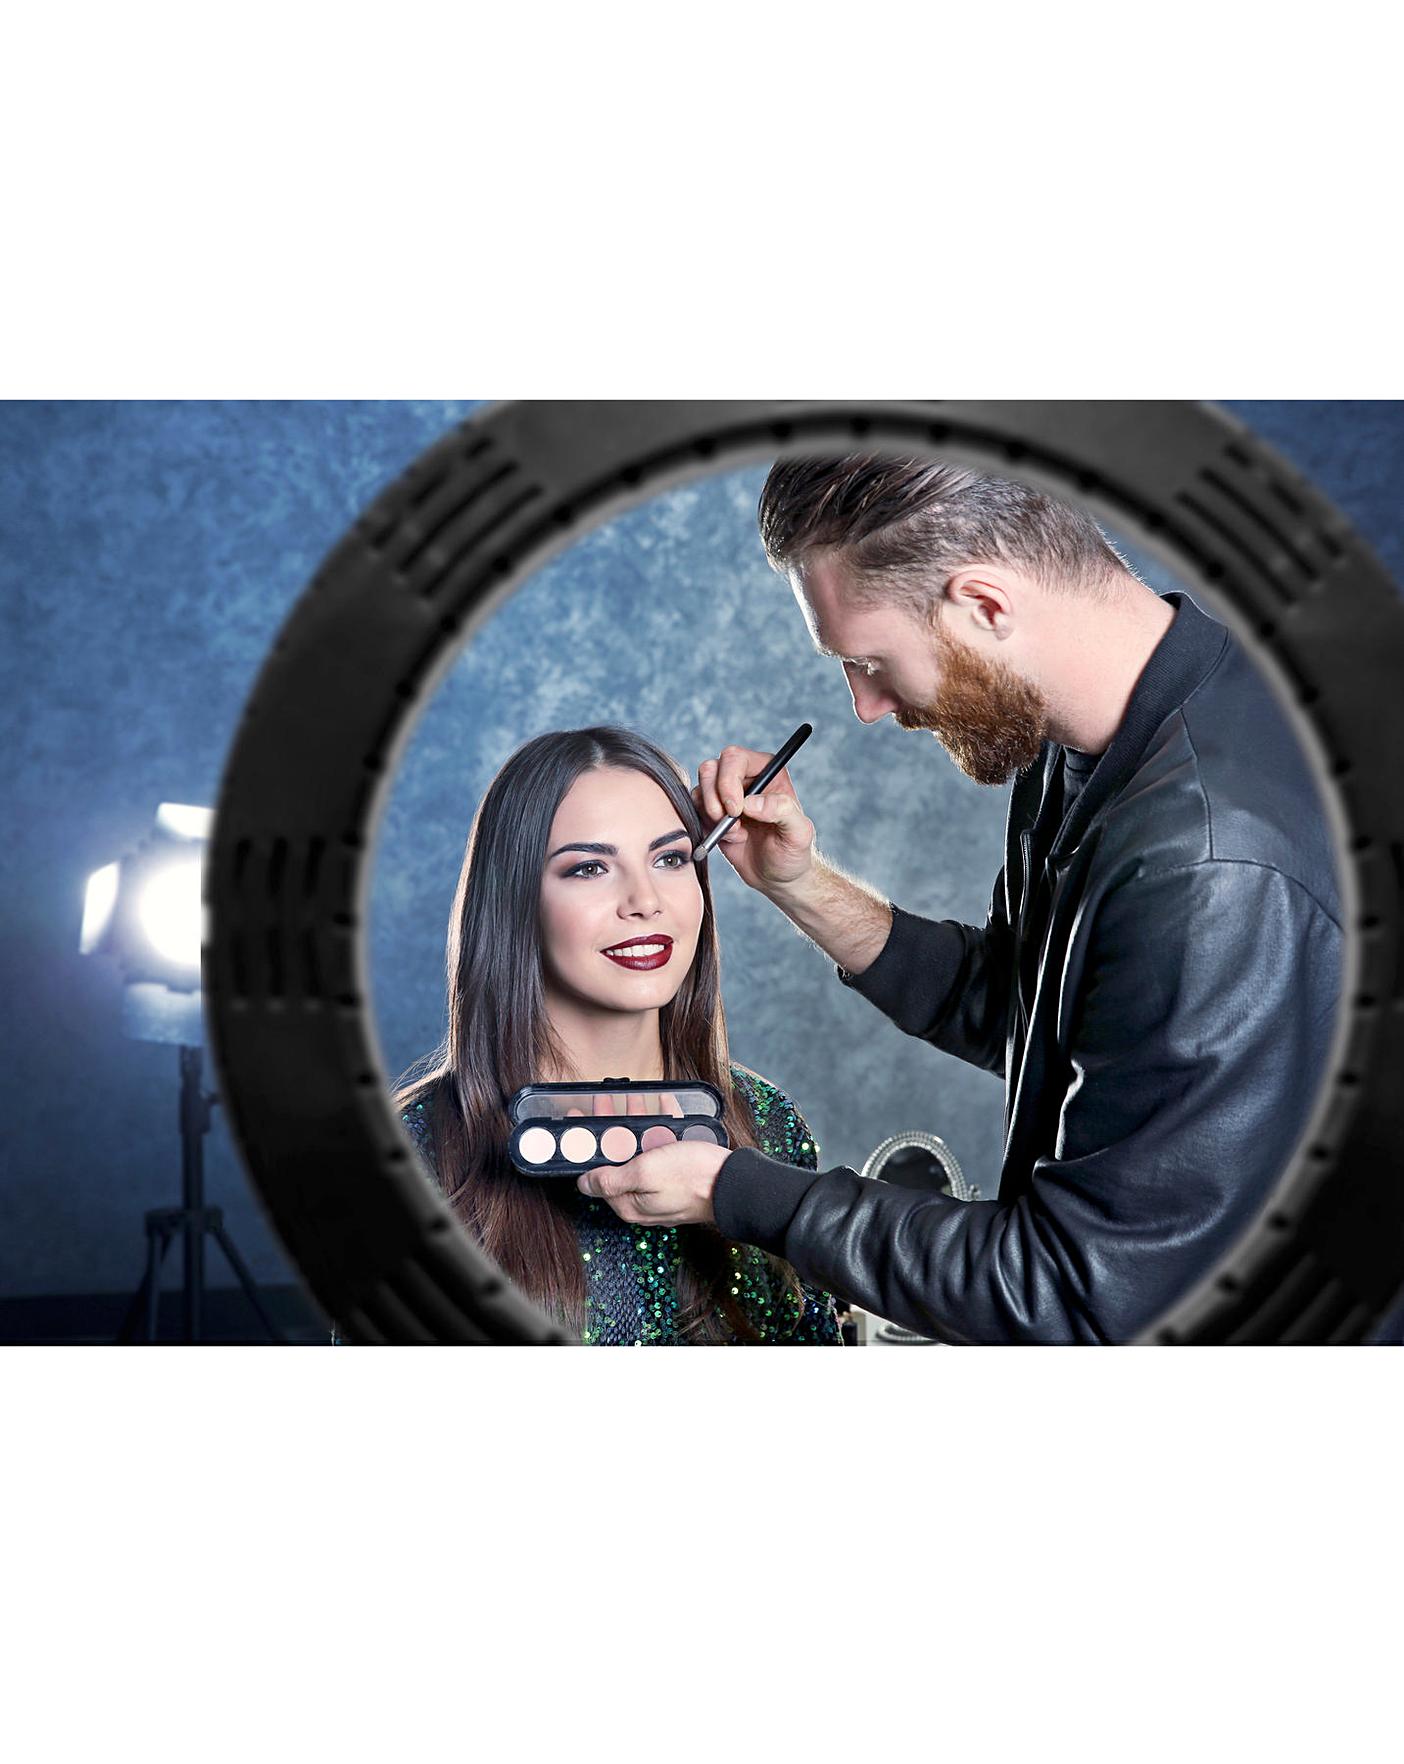 Rio Professional RGB Makeup & Vlogging 12-inch RGB LED Ring Light